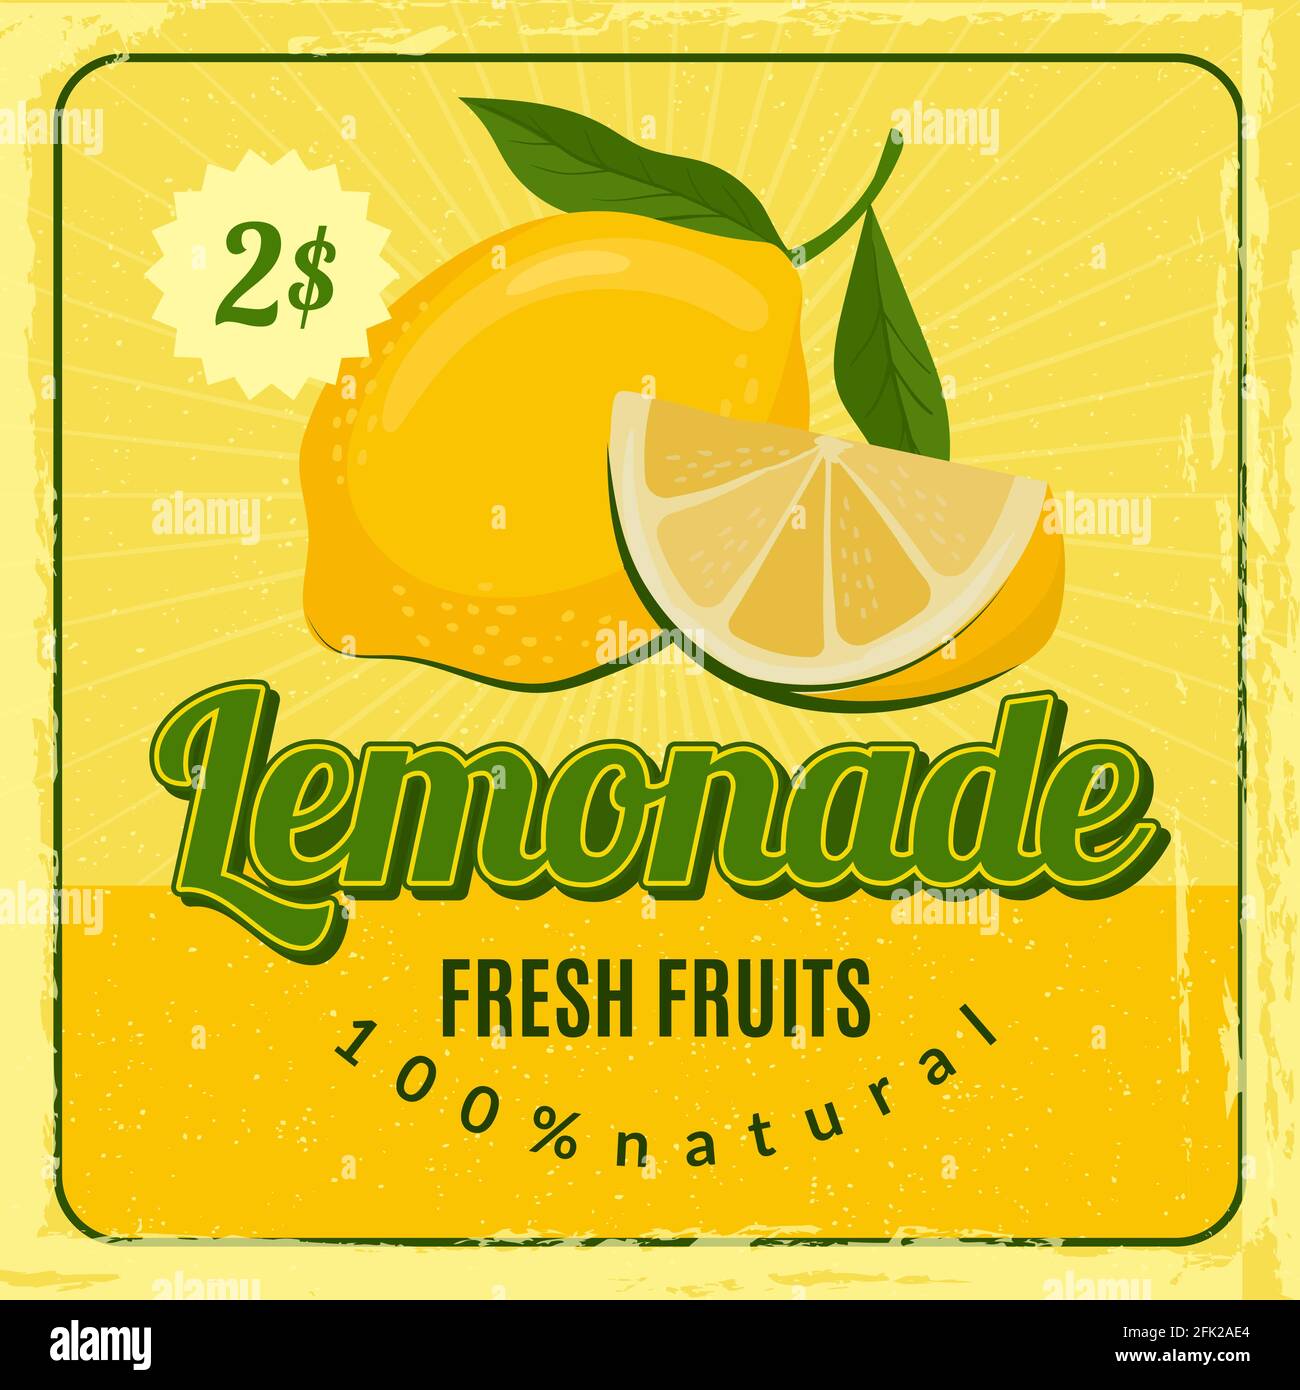 Lemonade retro poster. Brochure marketing placard with fresh lemon juice vector restaurant marketing design Stock Vector